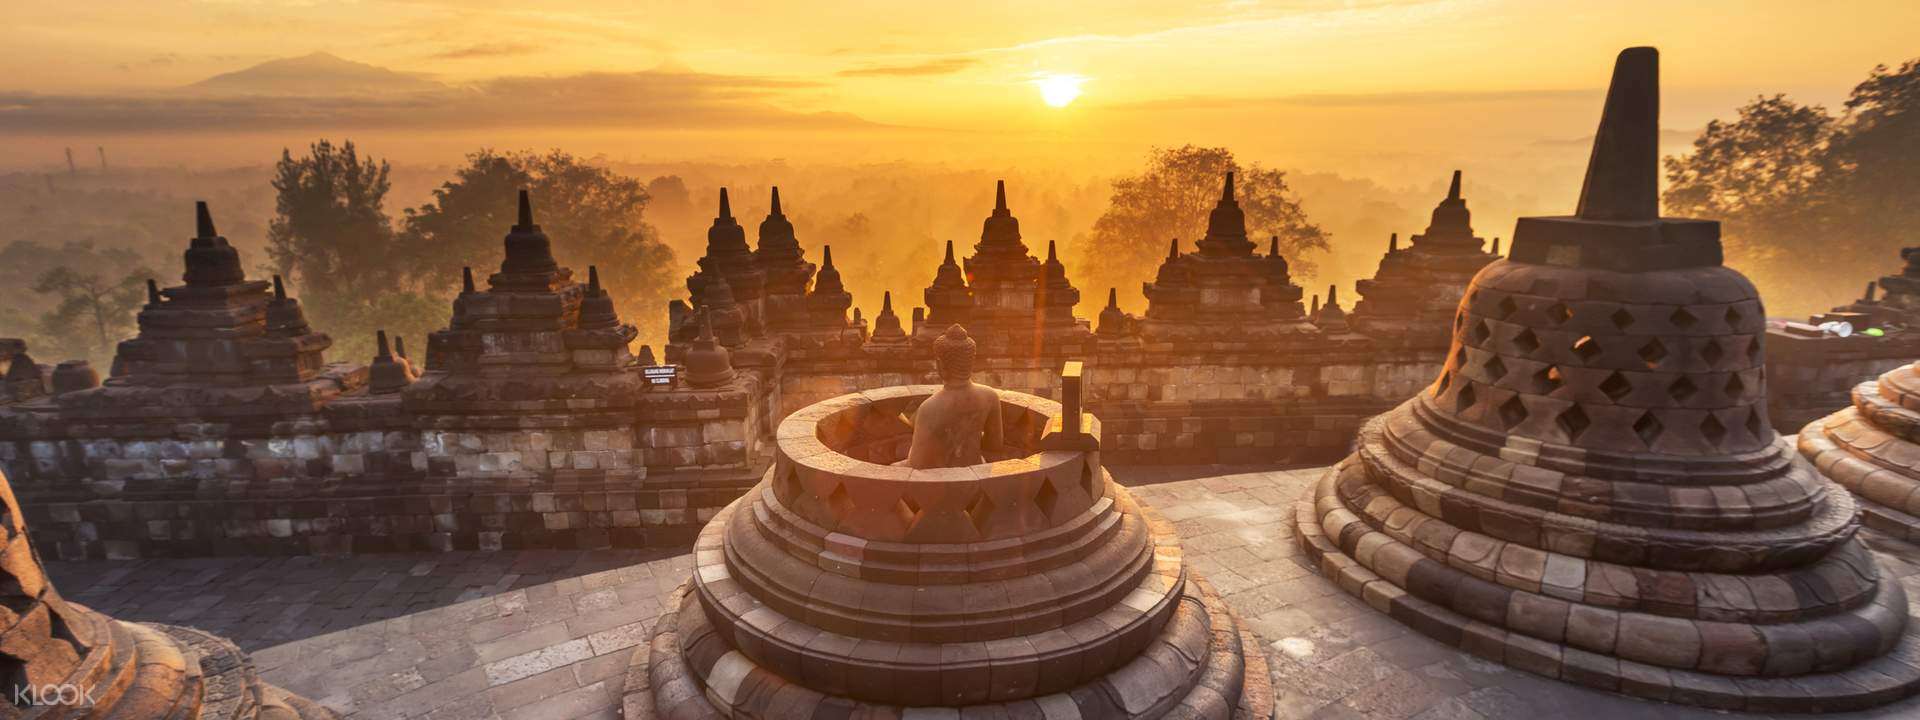  Borobudur  Sunrise dan Prambanan Temple  Tour di Yogyakarta 